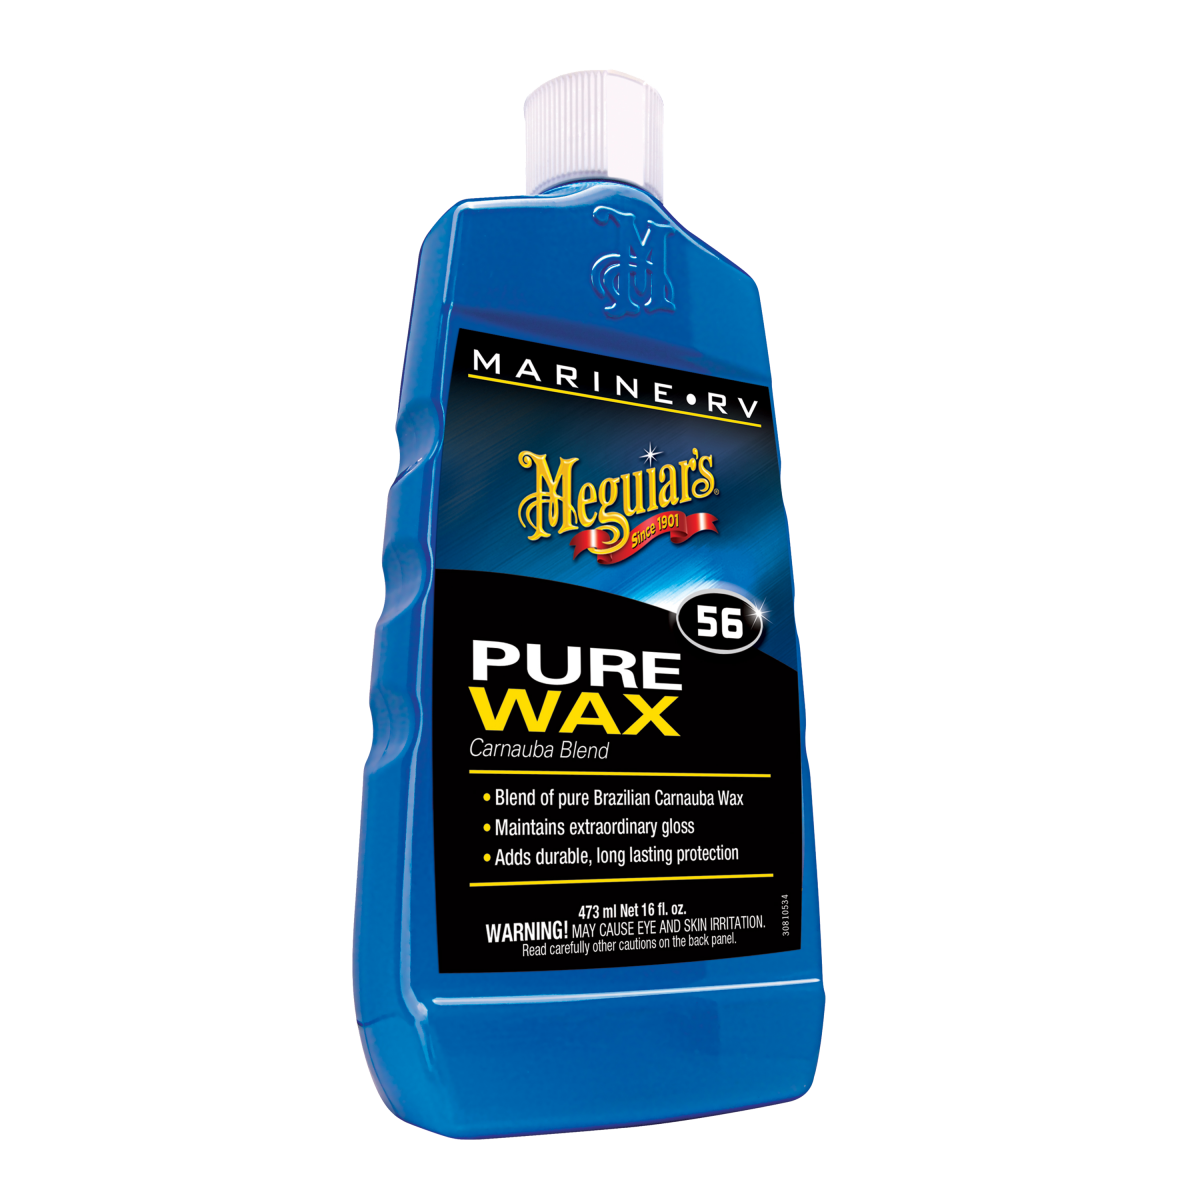  Meguiar's Marine/RV Pure Wax